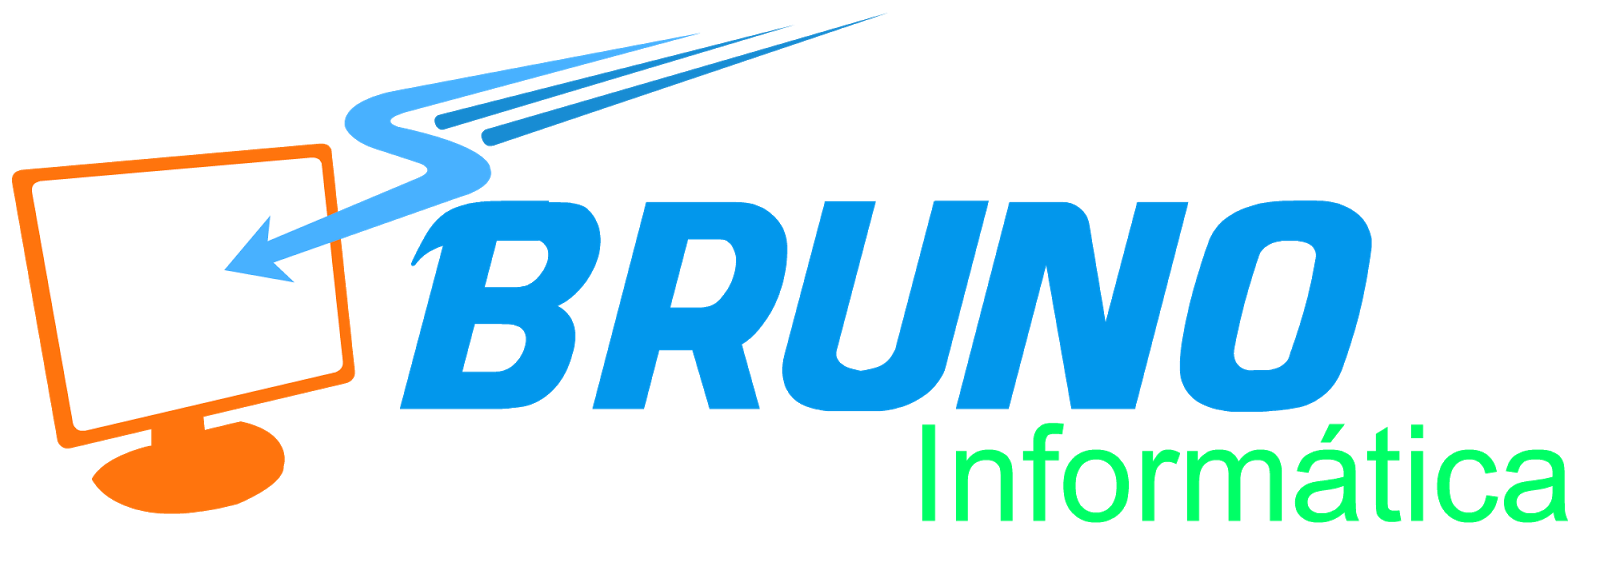 Bruno Informática